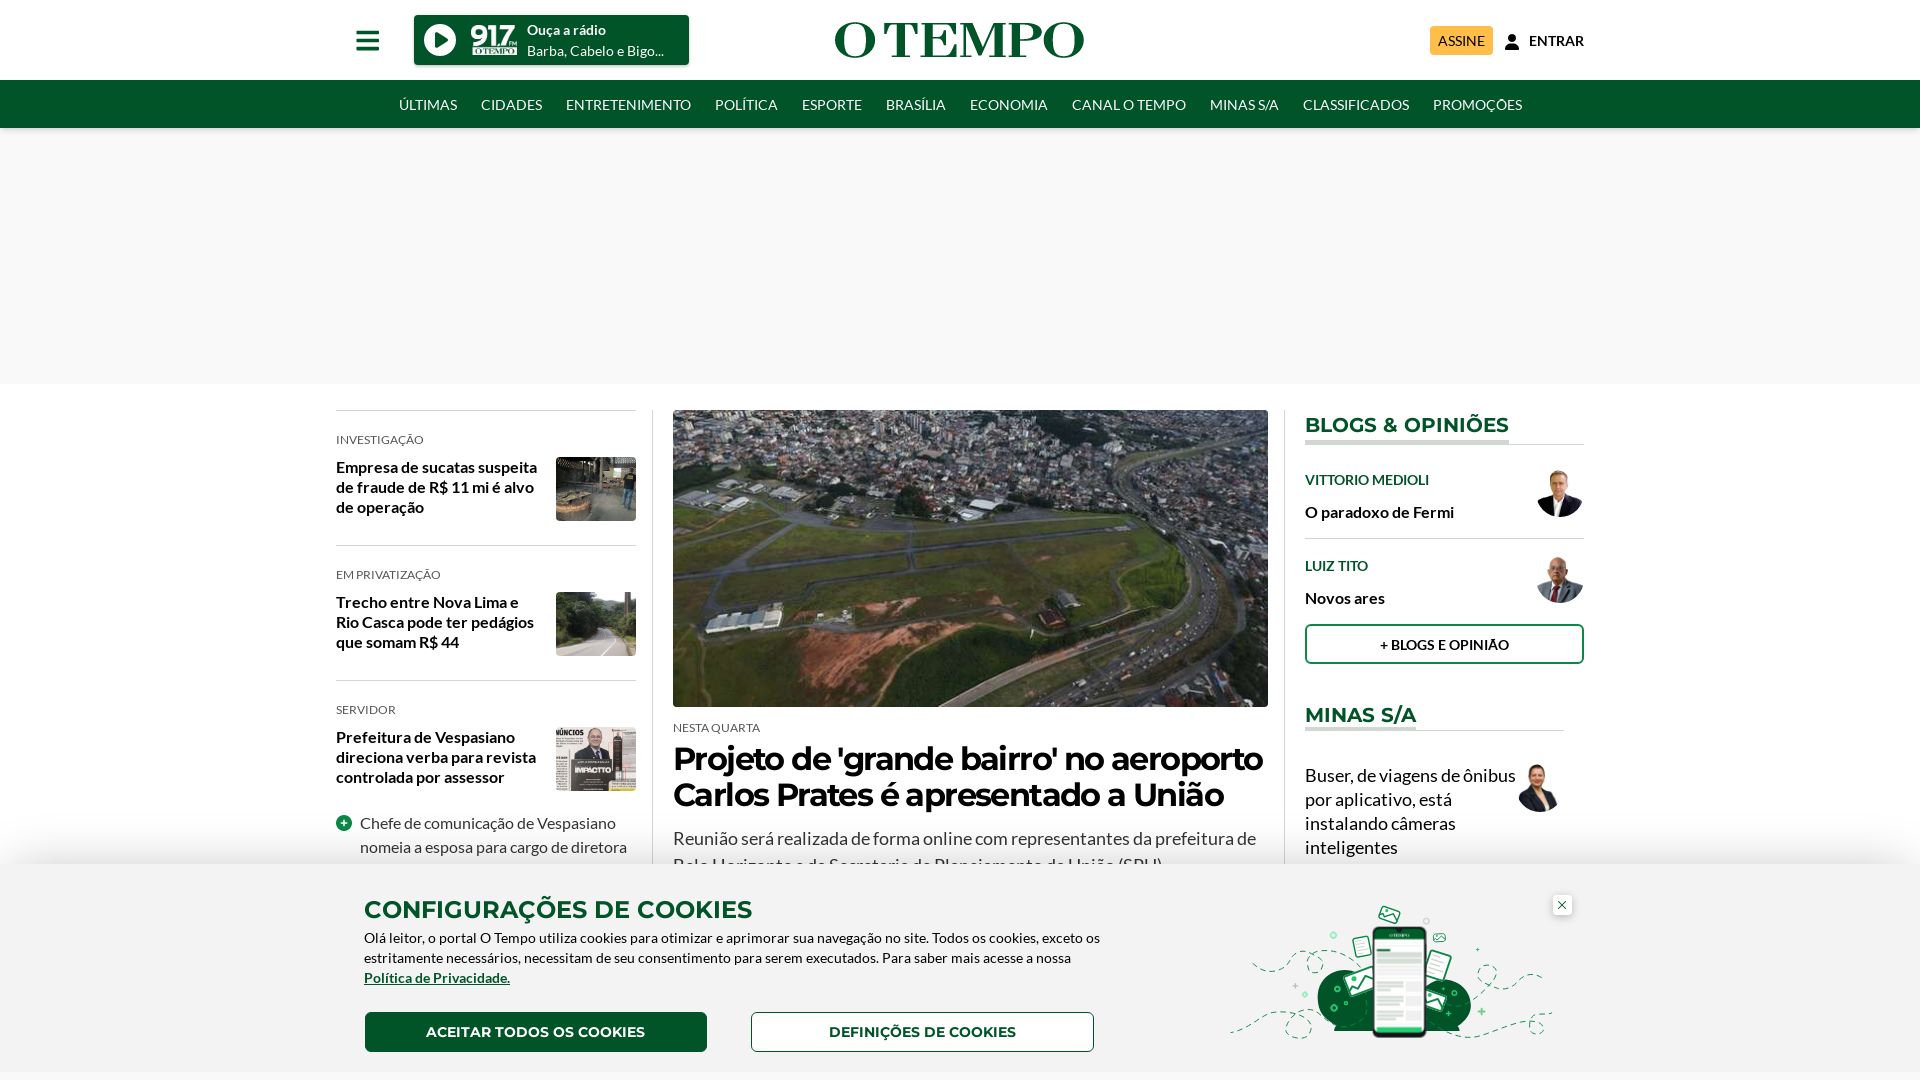 вебсайт otempo.com.br Є   ONLINE